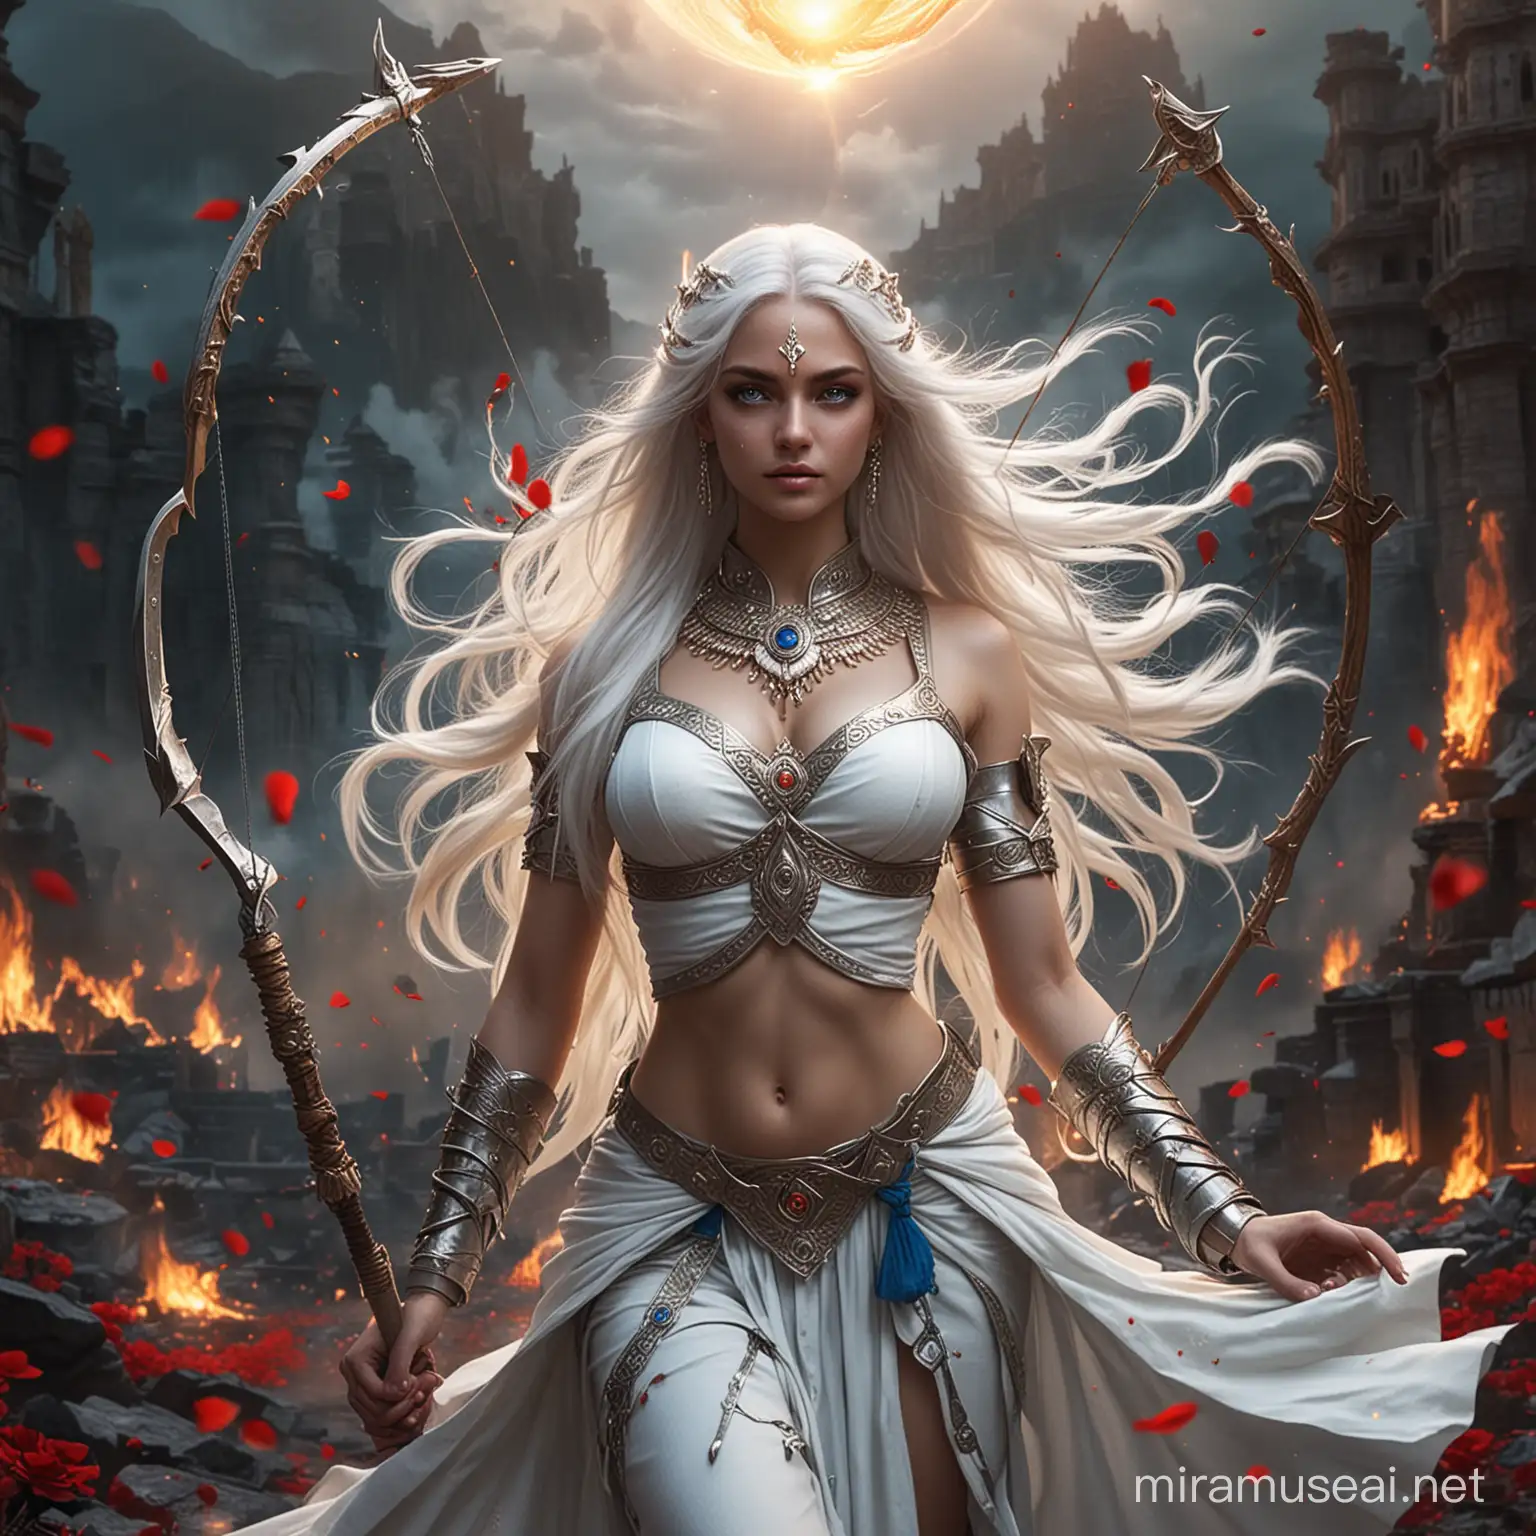 Empress Goddess in Combat WhiteHaired Warrior Amidst Cosmic Energy